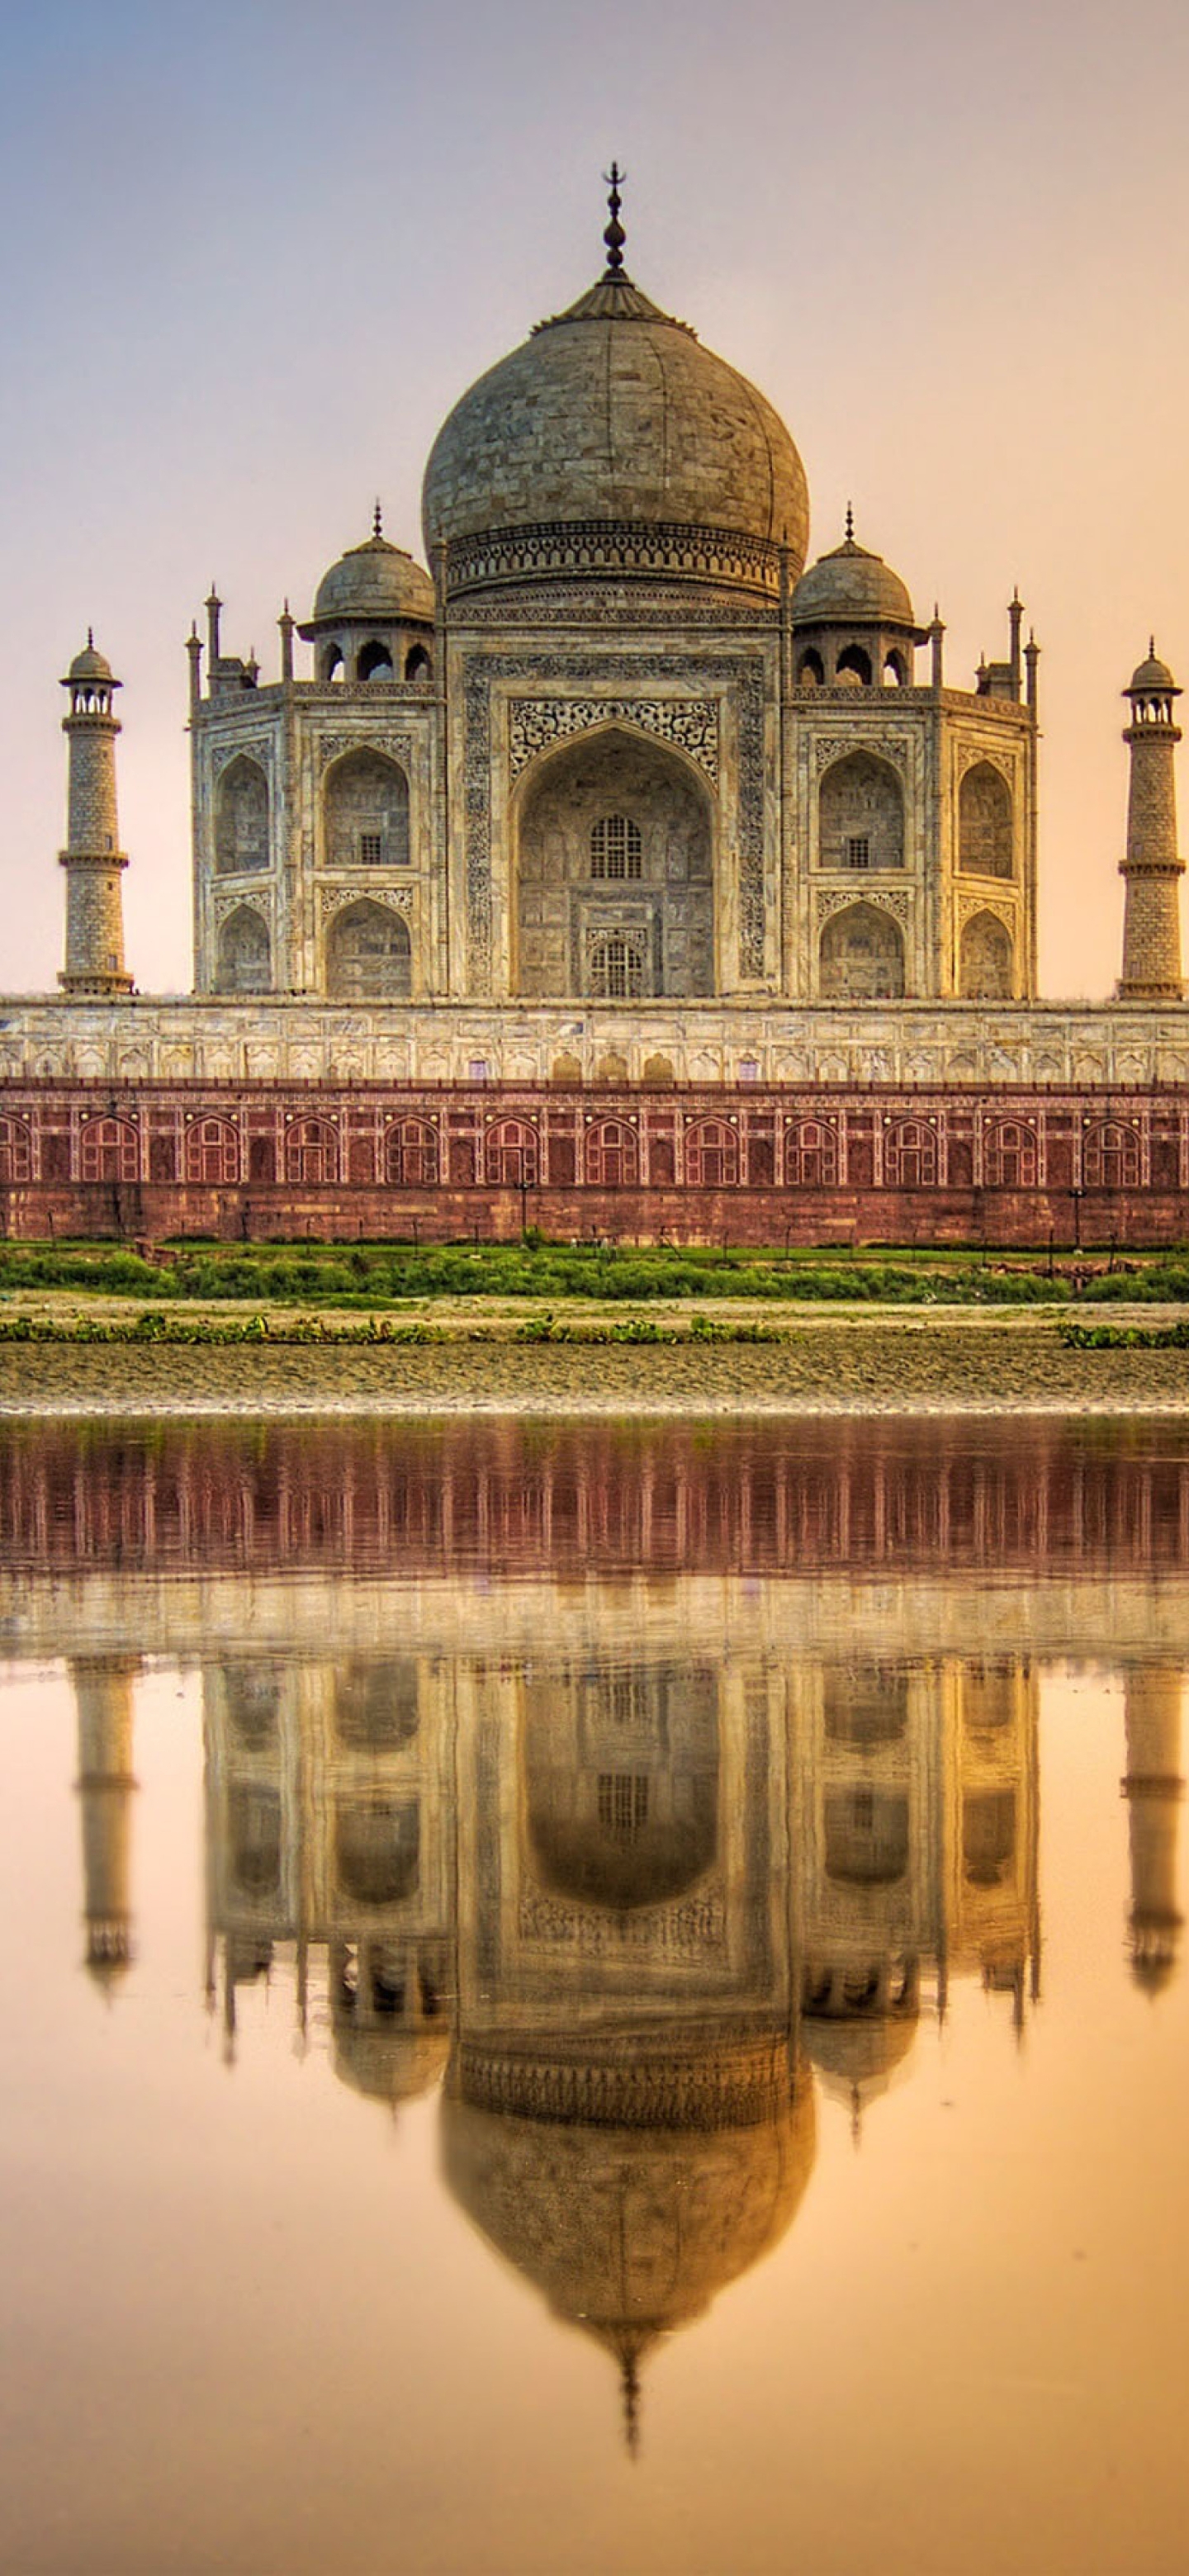 Image: Taj Mahal, India, reflection